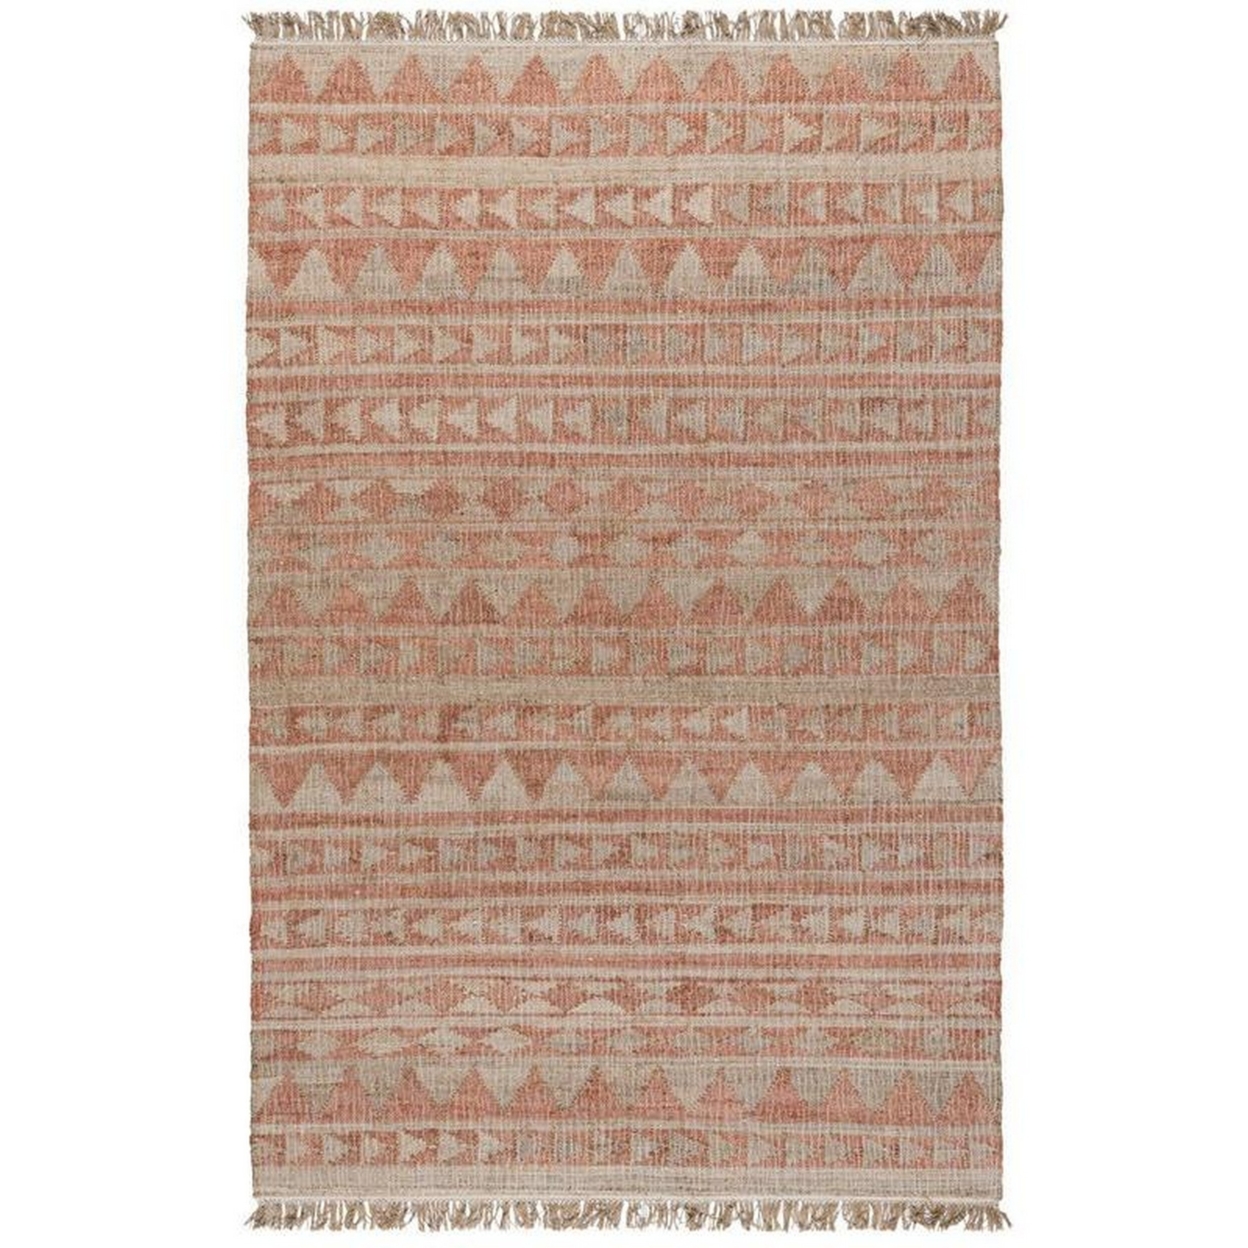 Moly 5 X 8 Tassel Area Rug, Tribal Triangle Pattern, Orange Handwoven Jute - Saltoro Sherpi